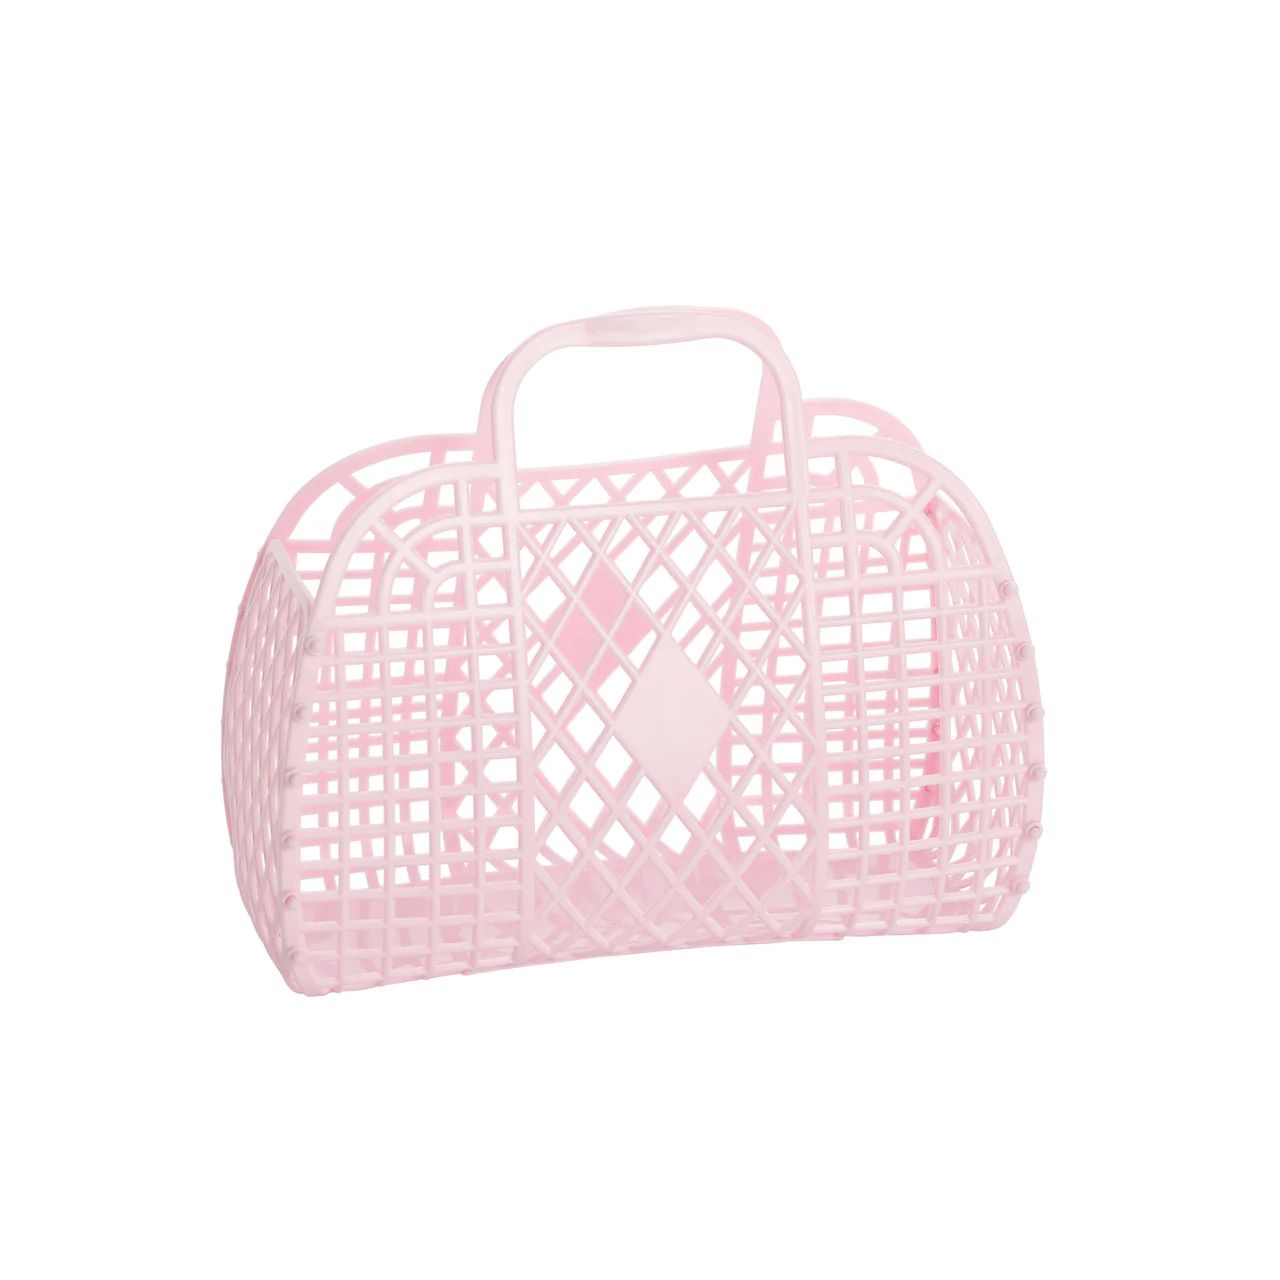 sun jellies retro basket, pink | minnow